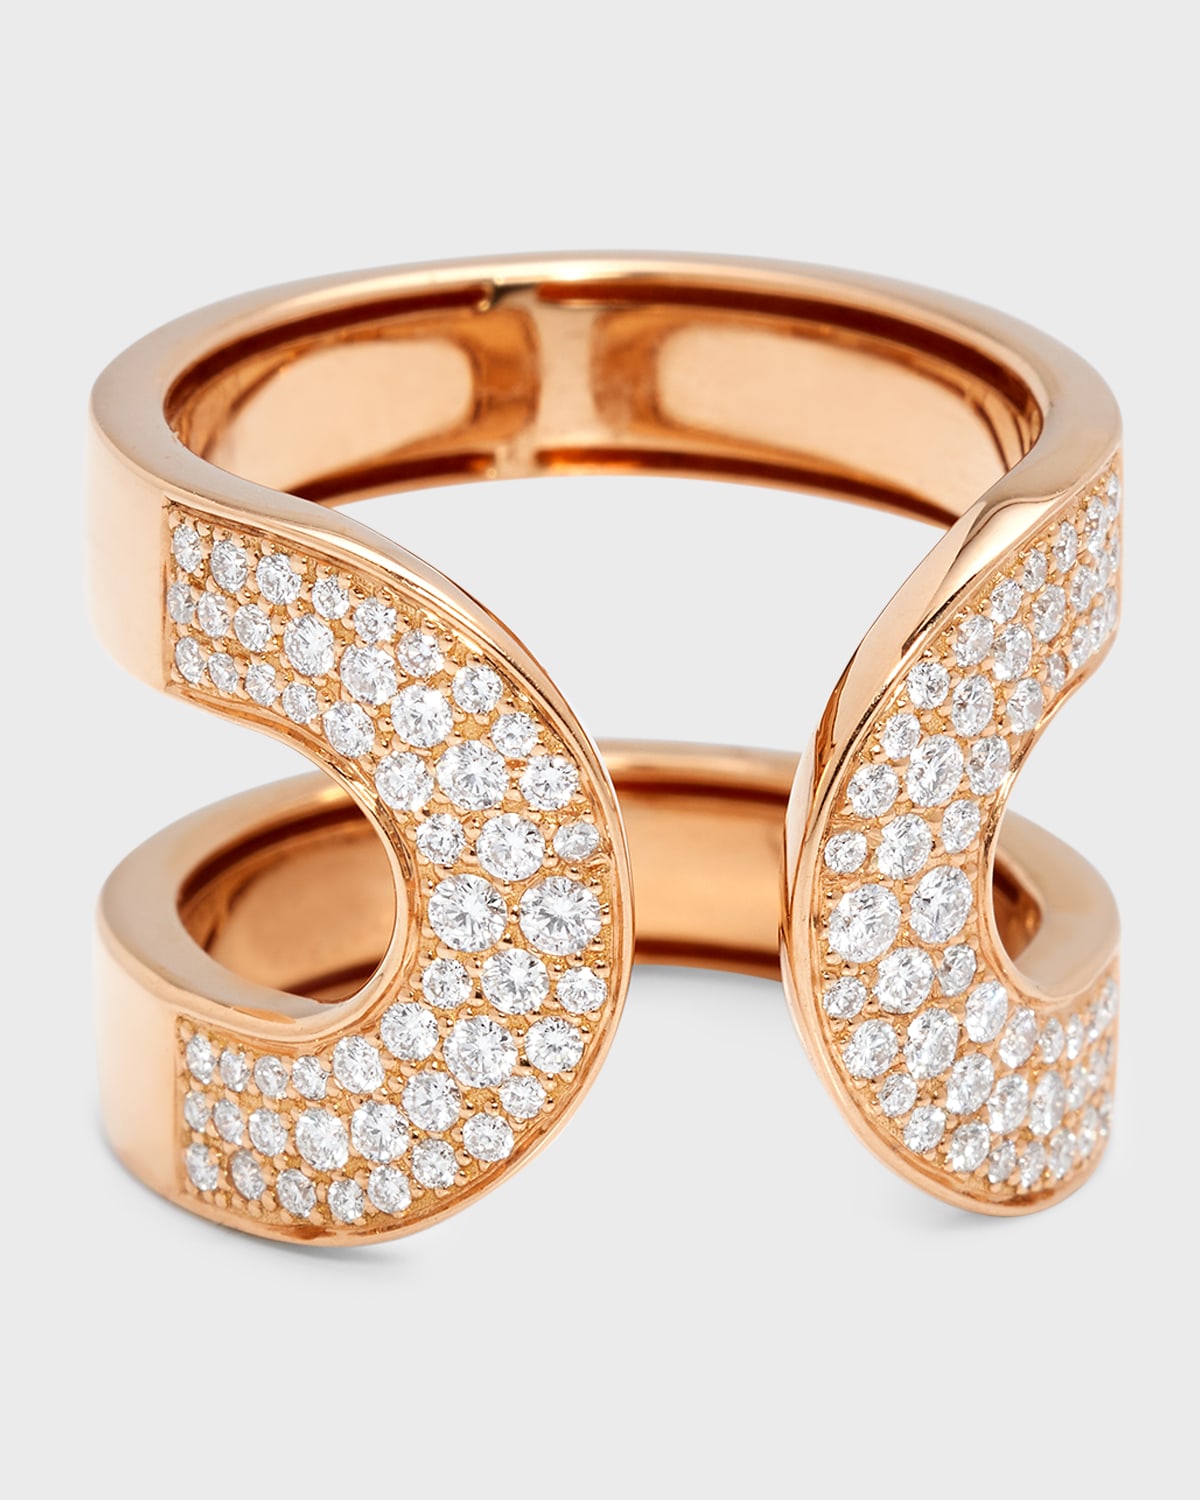 Mattioli 18k Rose Gold Diamond Aruba Ring - Size 6.5